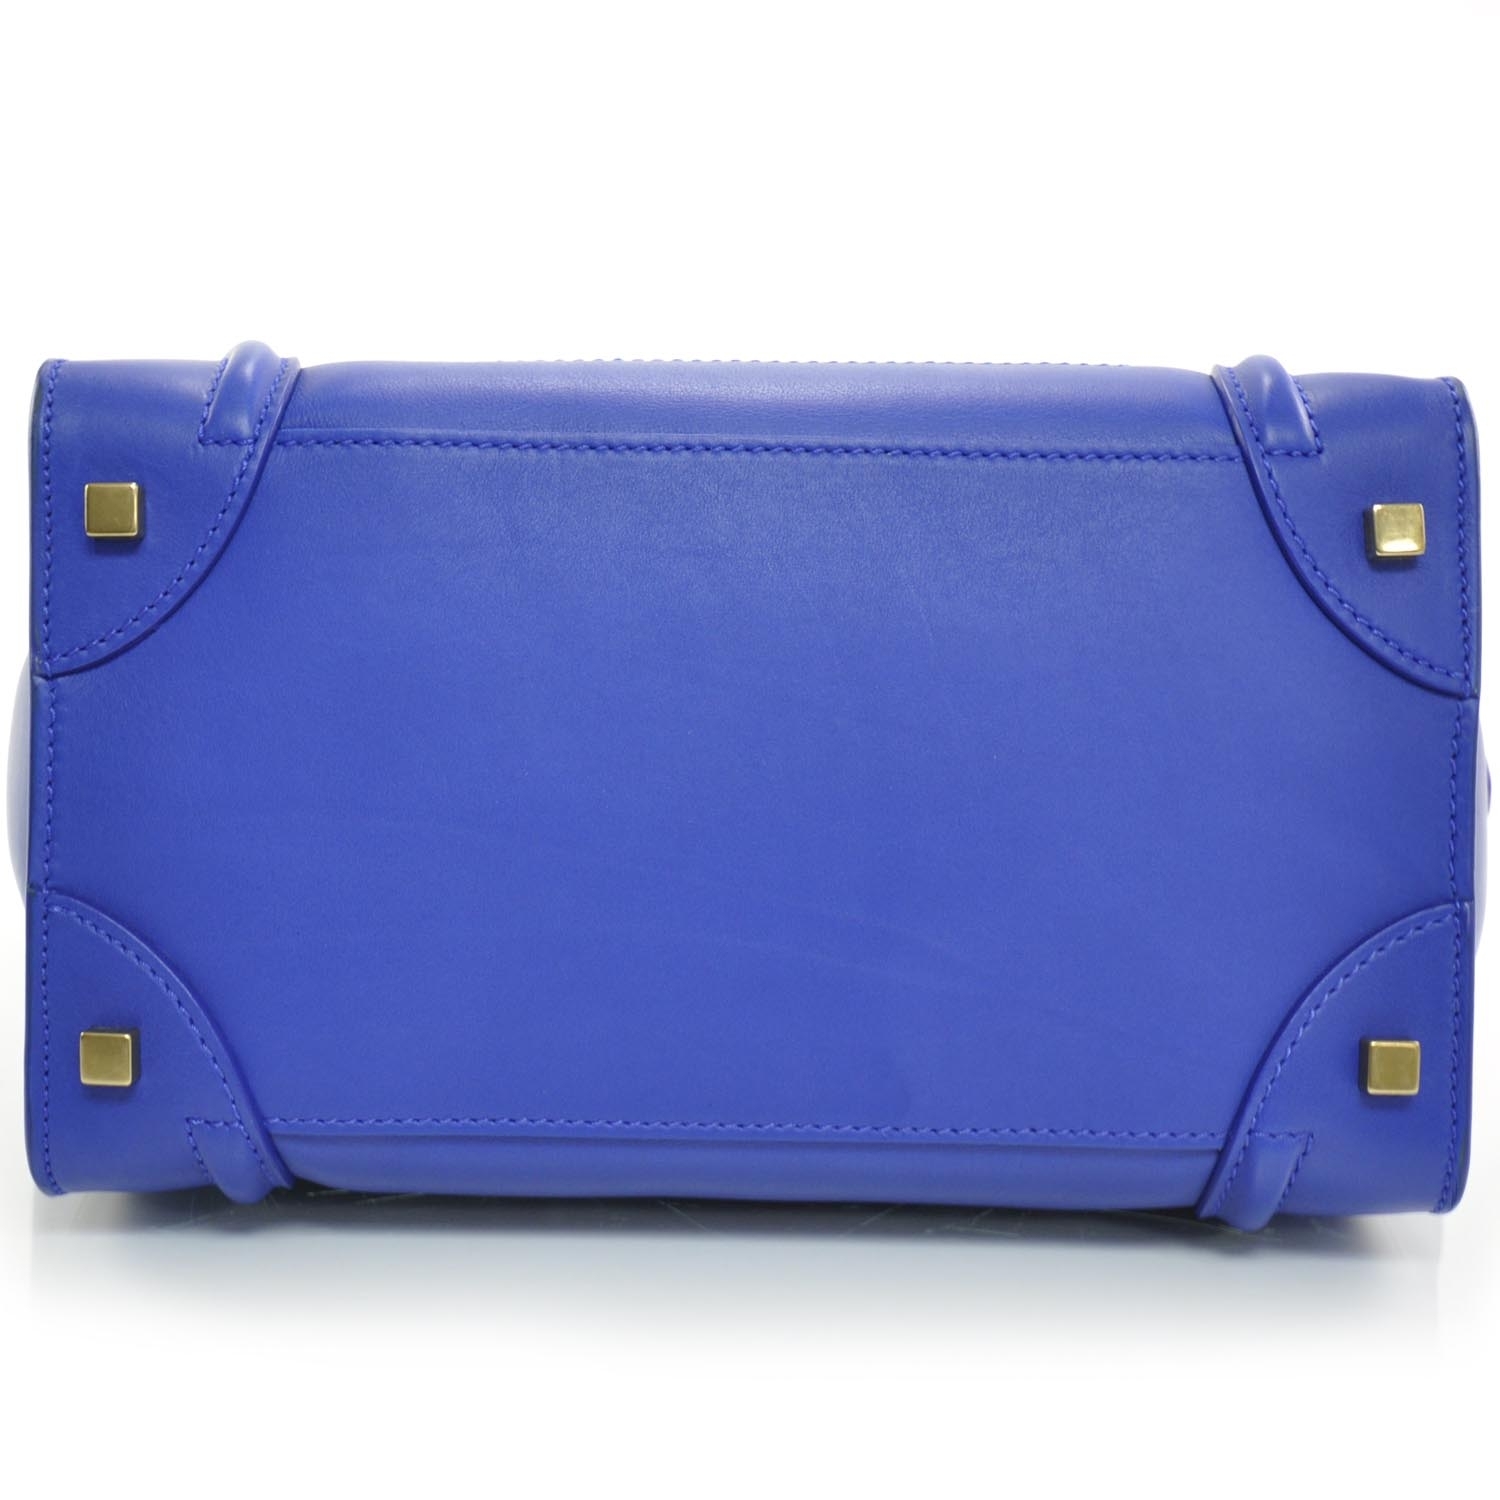 CELINE Smooth Leather Mini Luggage Bag Cobalt Royal Blue 26424